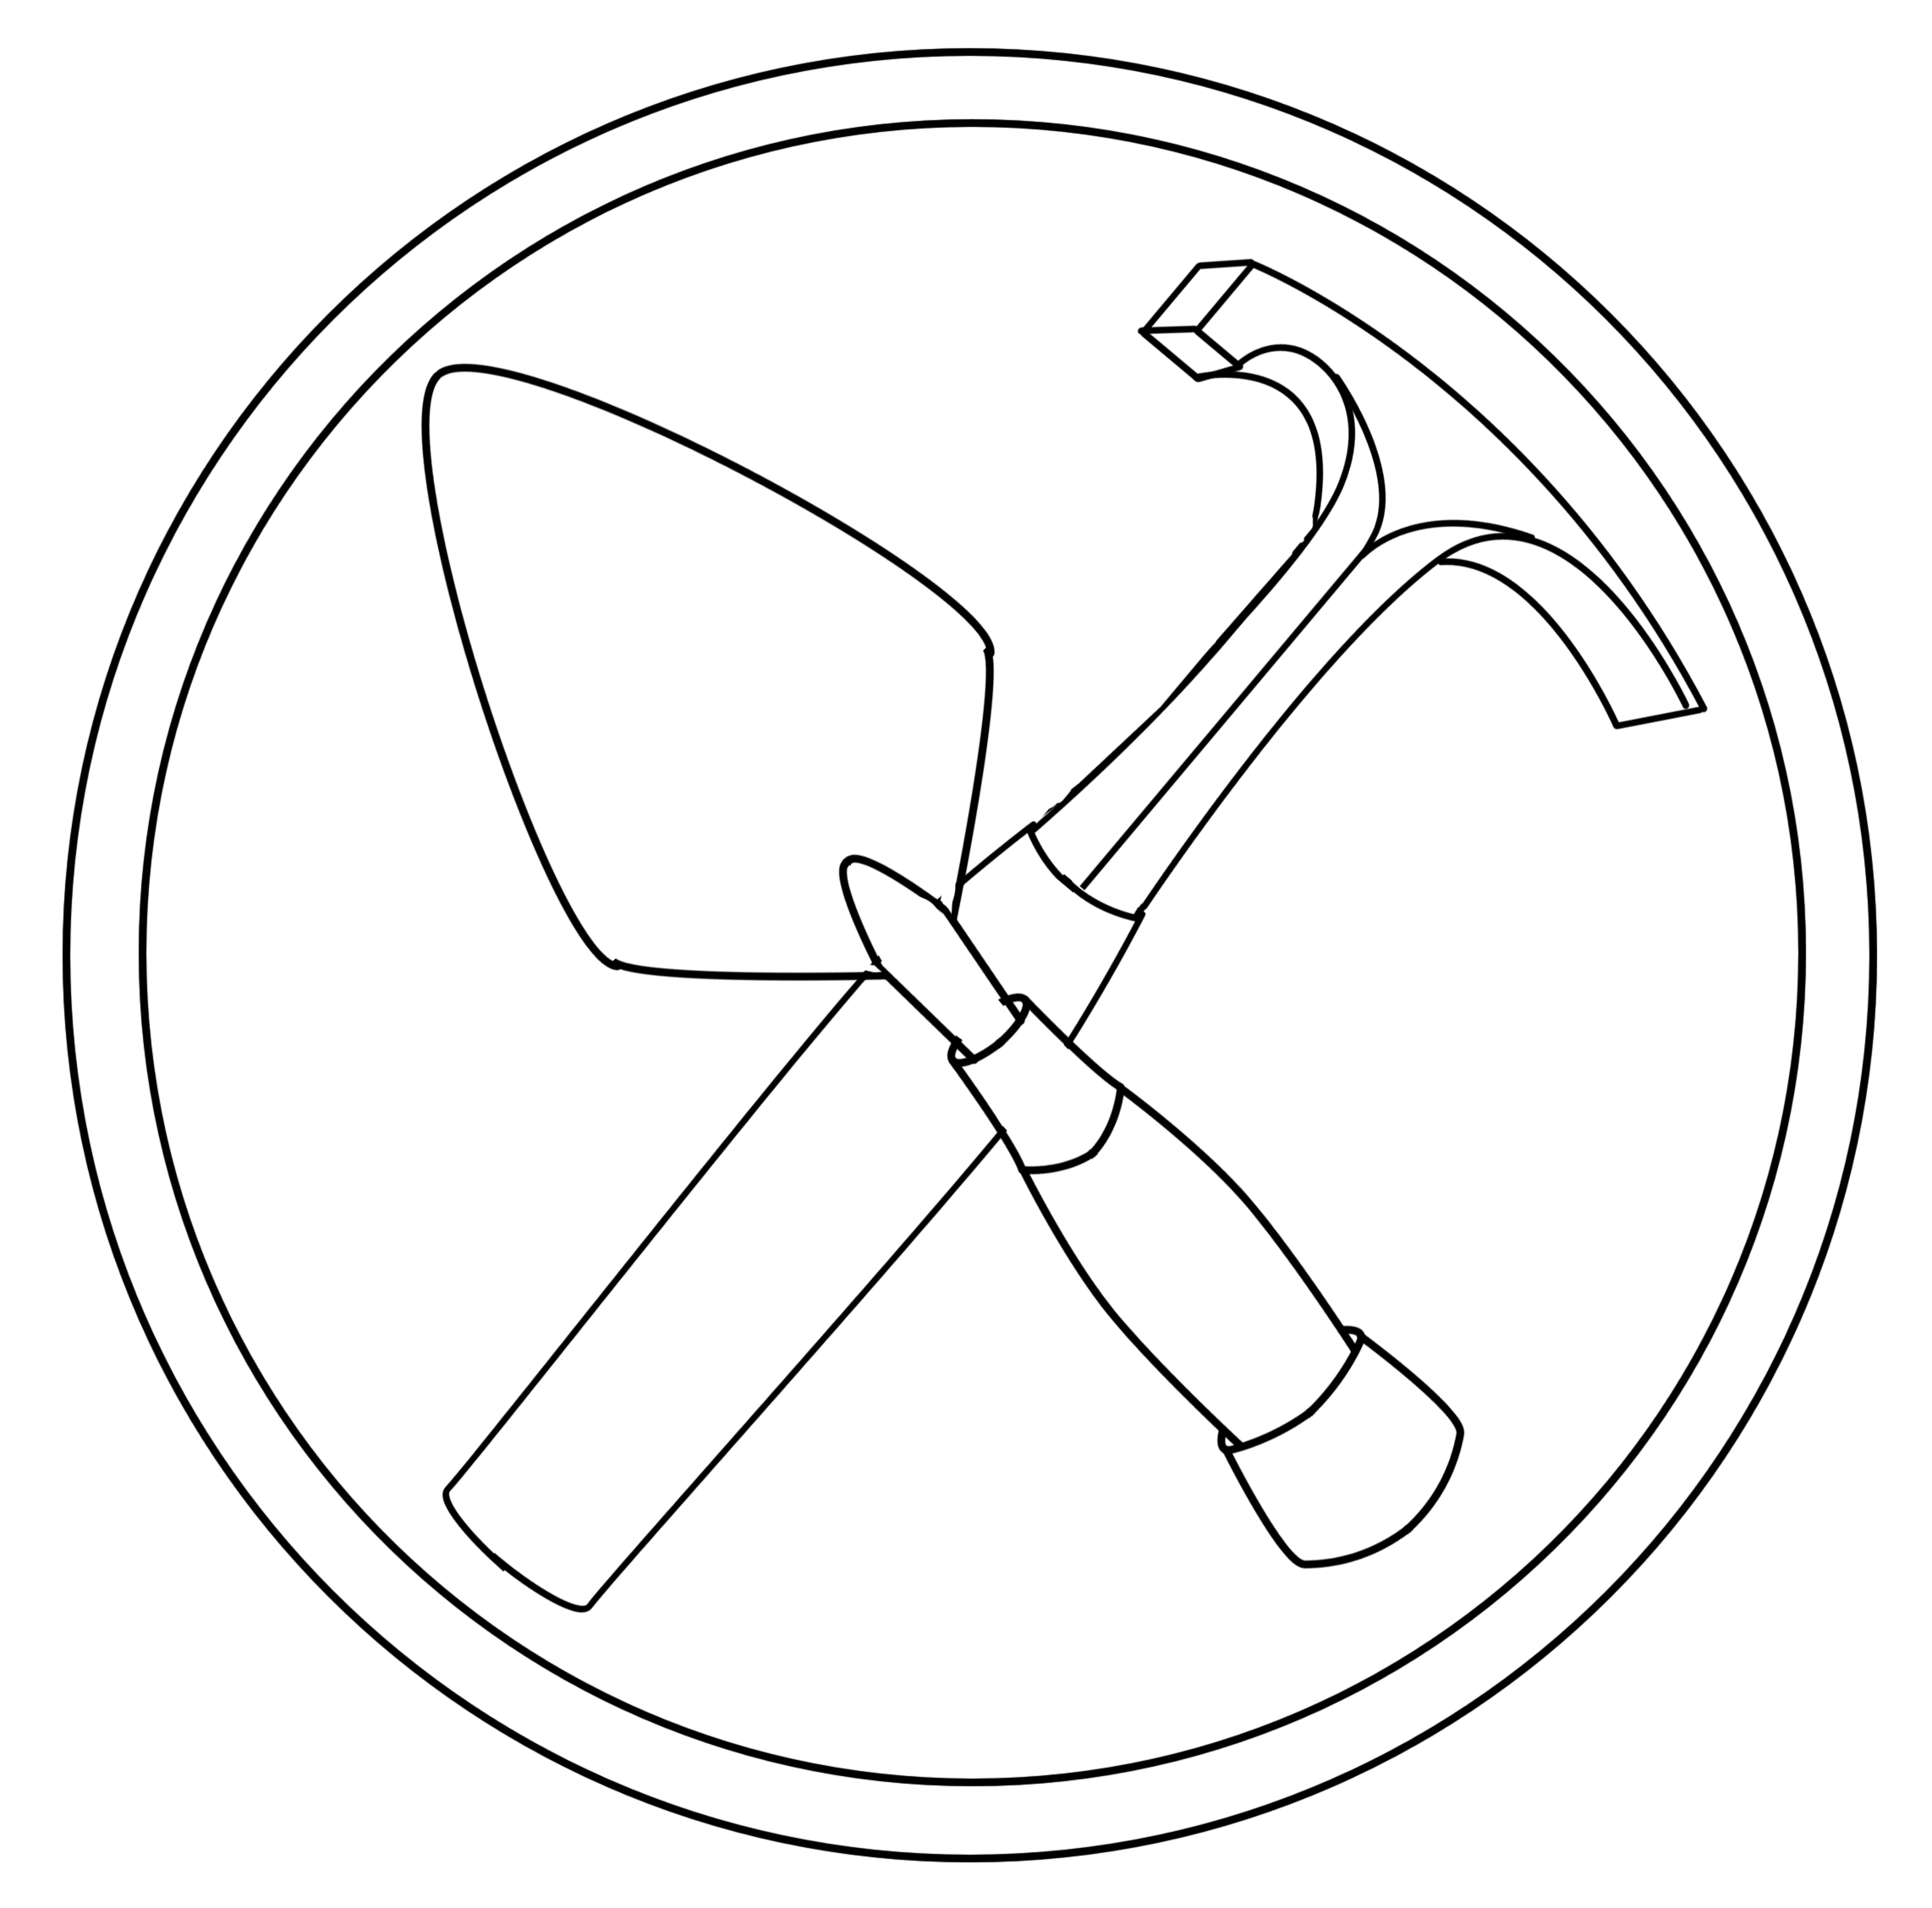 Mason's Logo